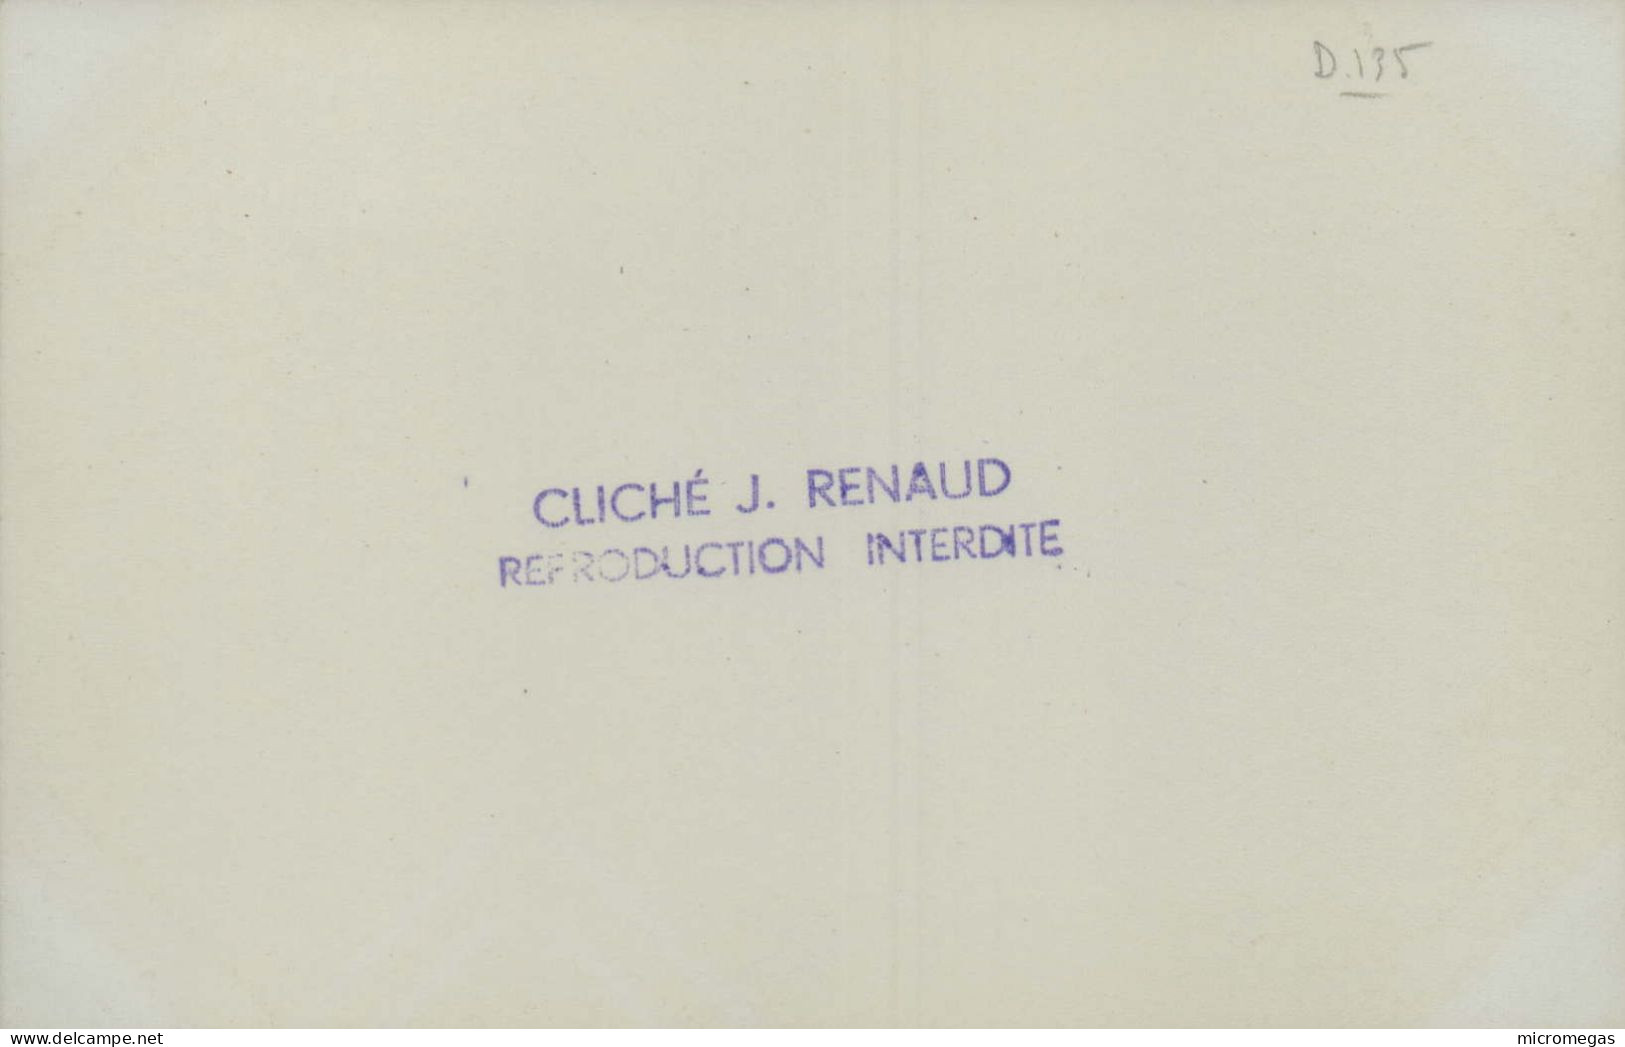 D-135 - Cliché J. Renaud - Treni